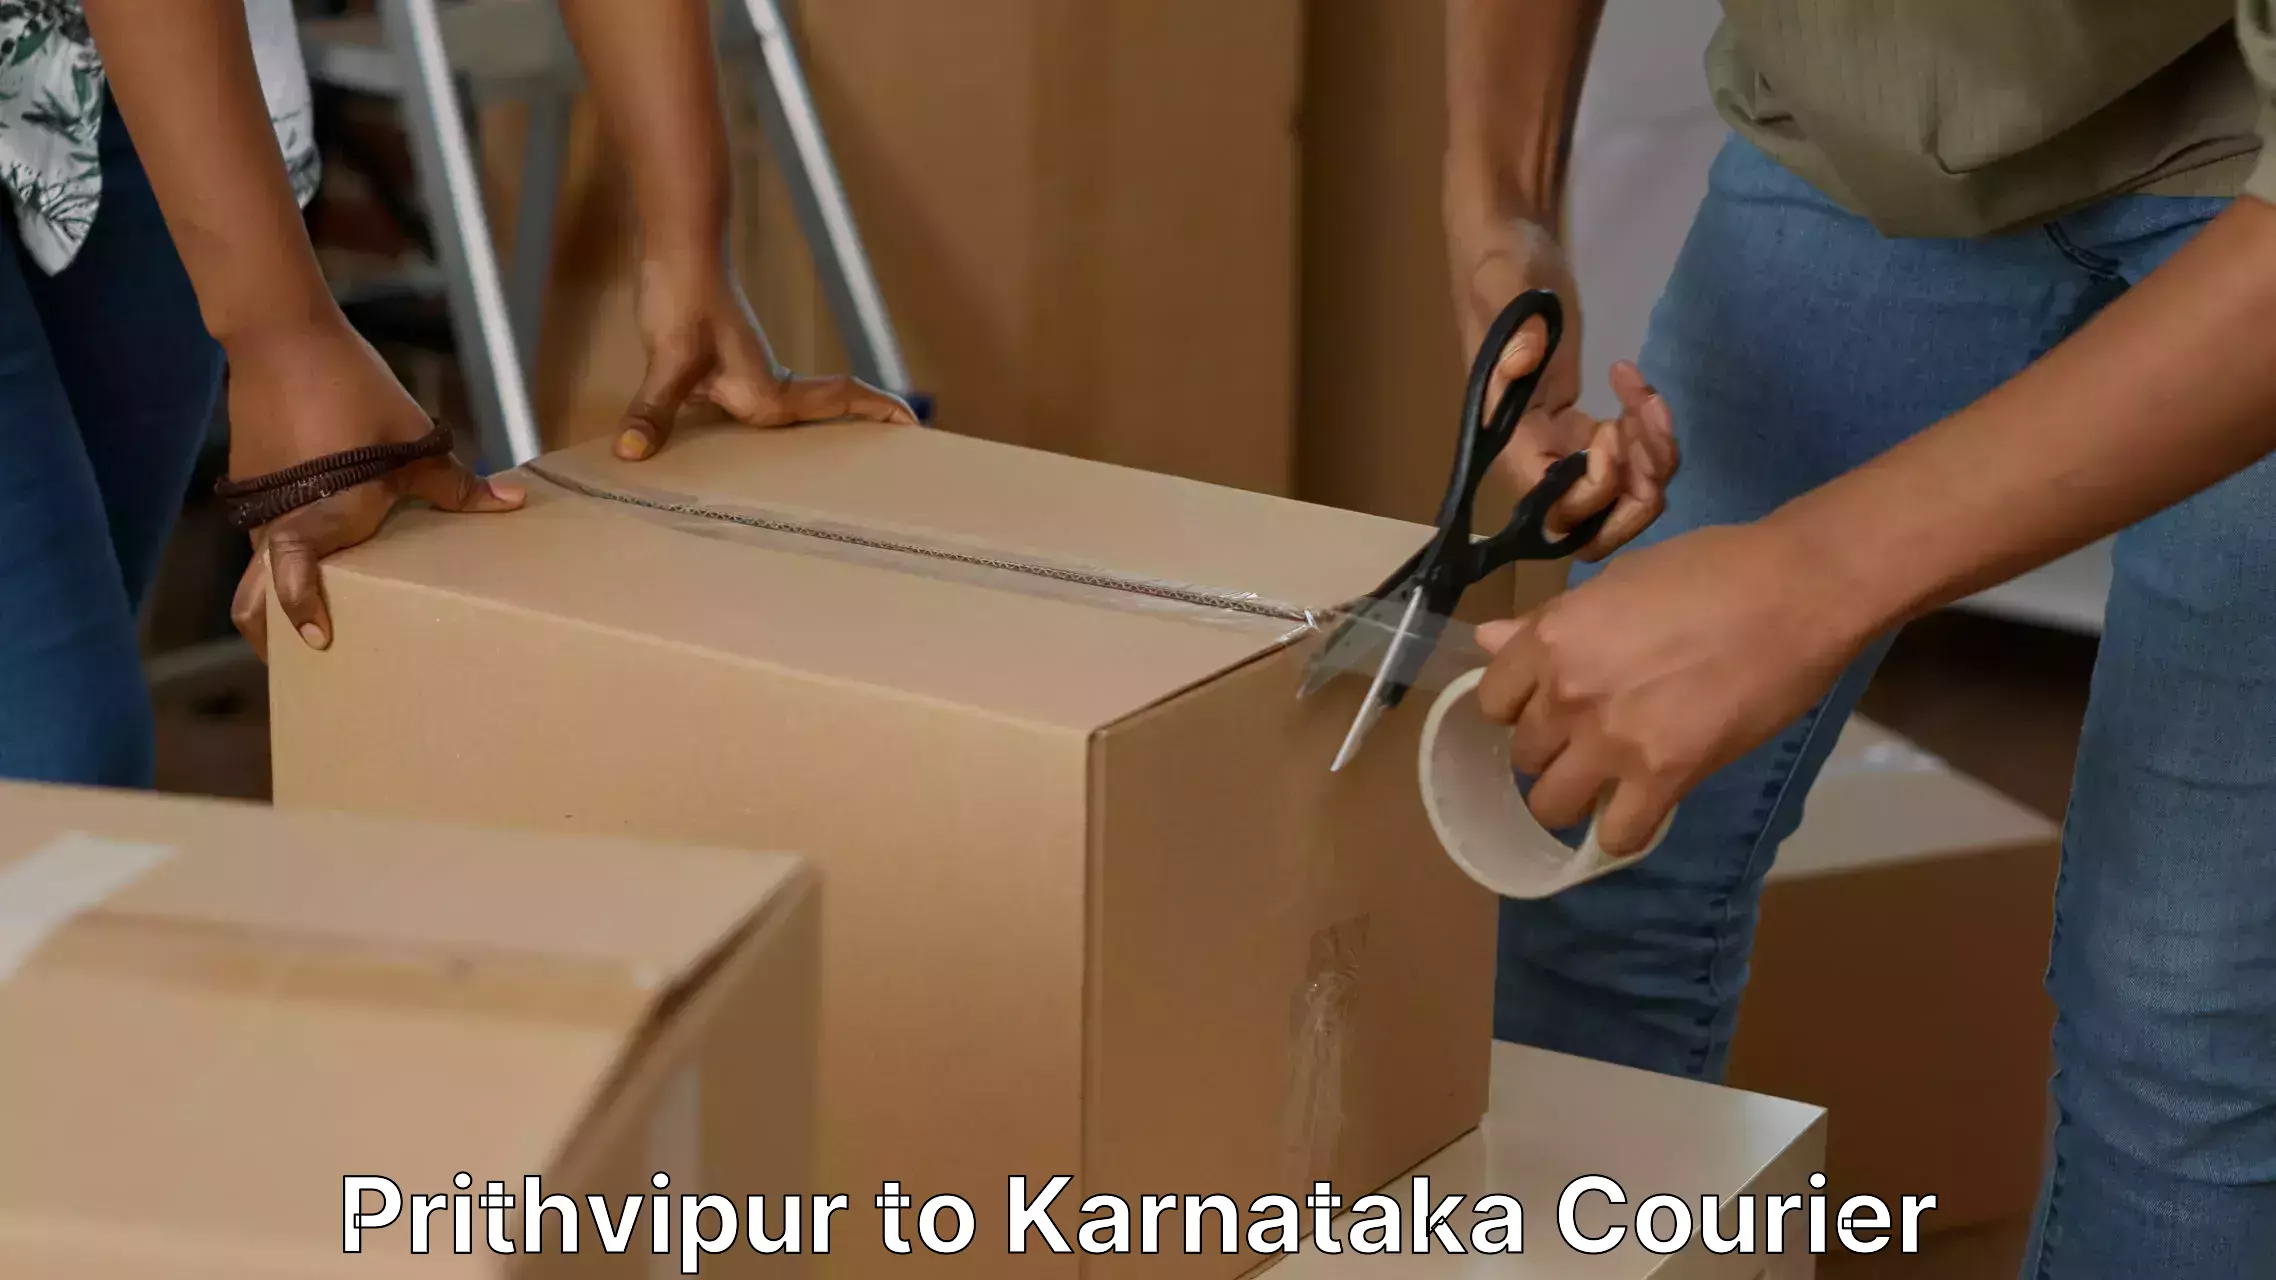 Furniture moving experts Prithvipur to Mundgod